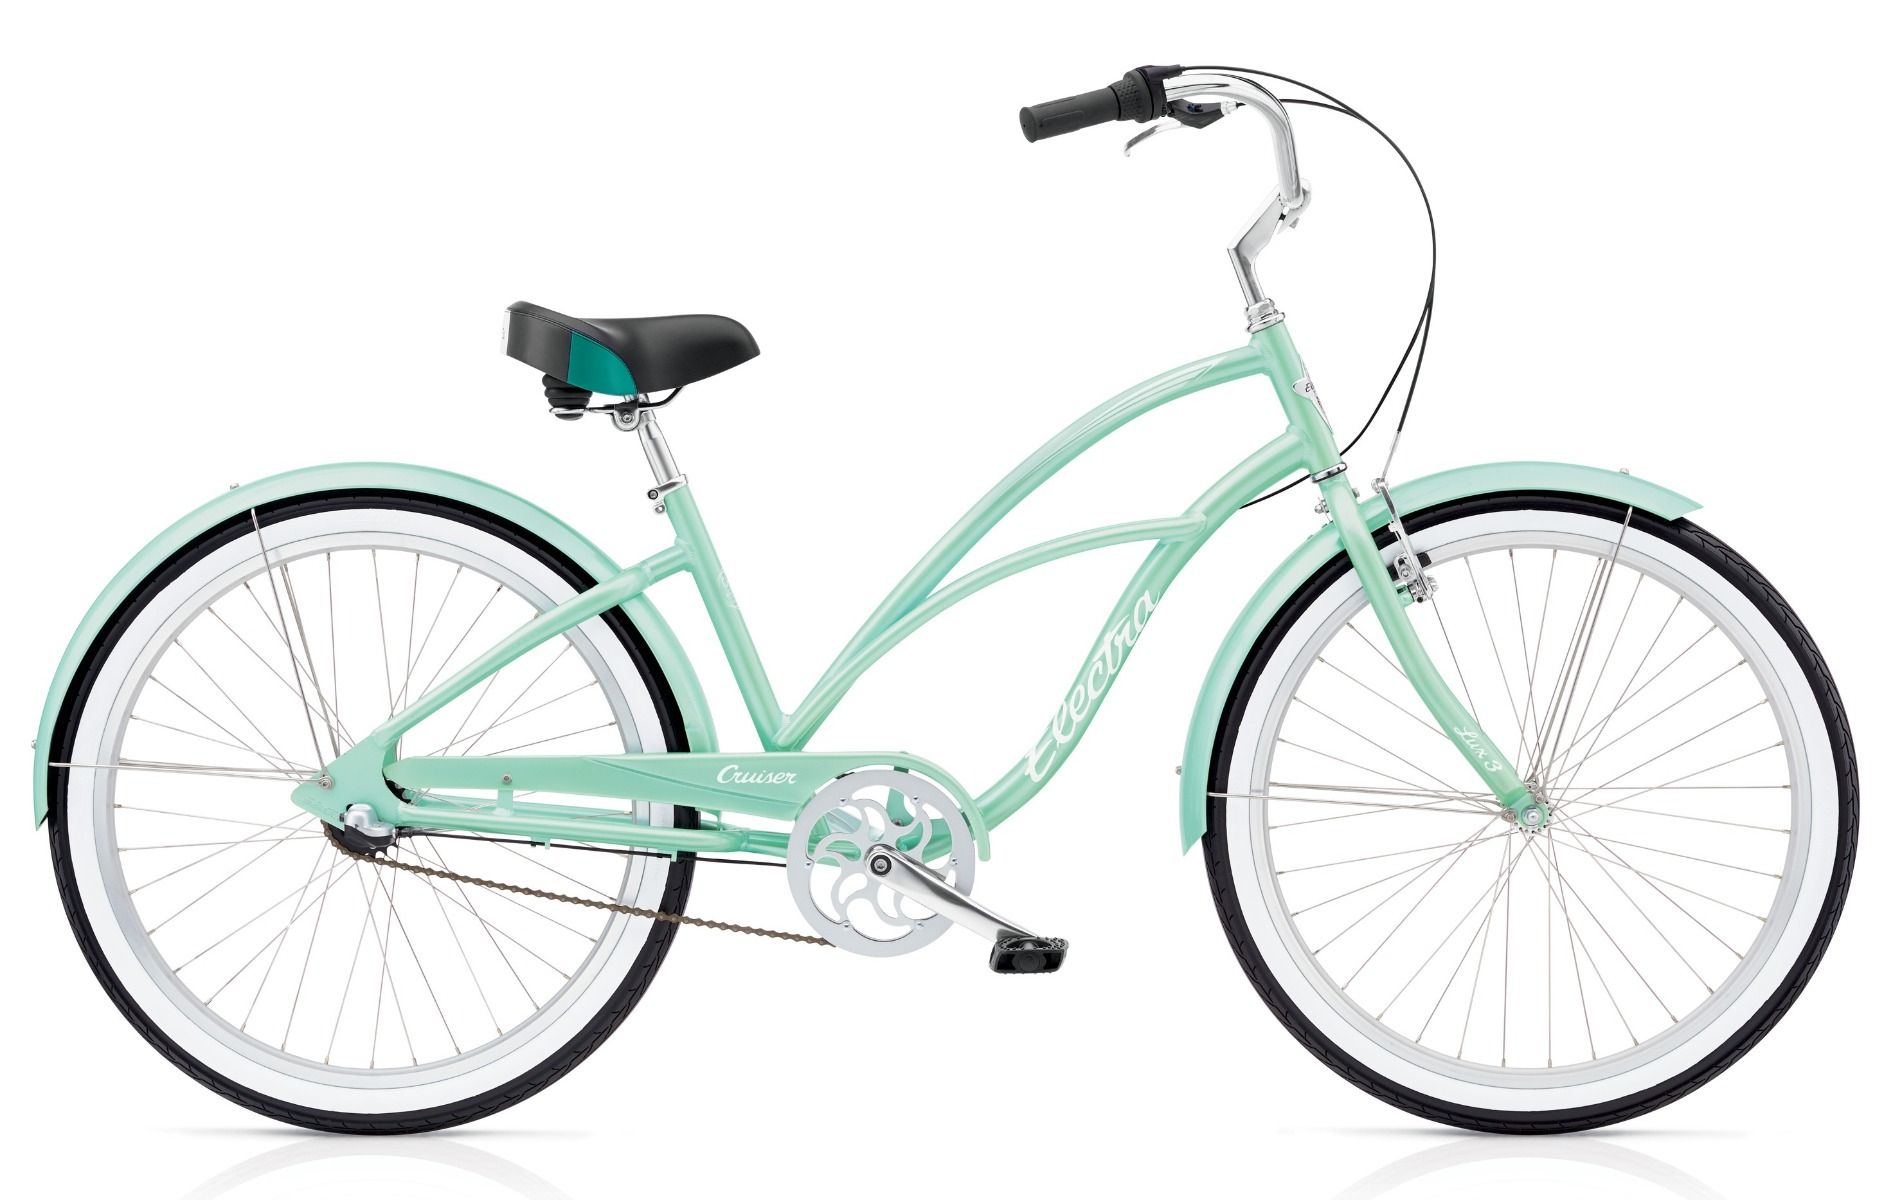  Отзывы о Женском велосипеде Electra Cruiser Lux 3i Ladies 2020